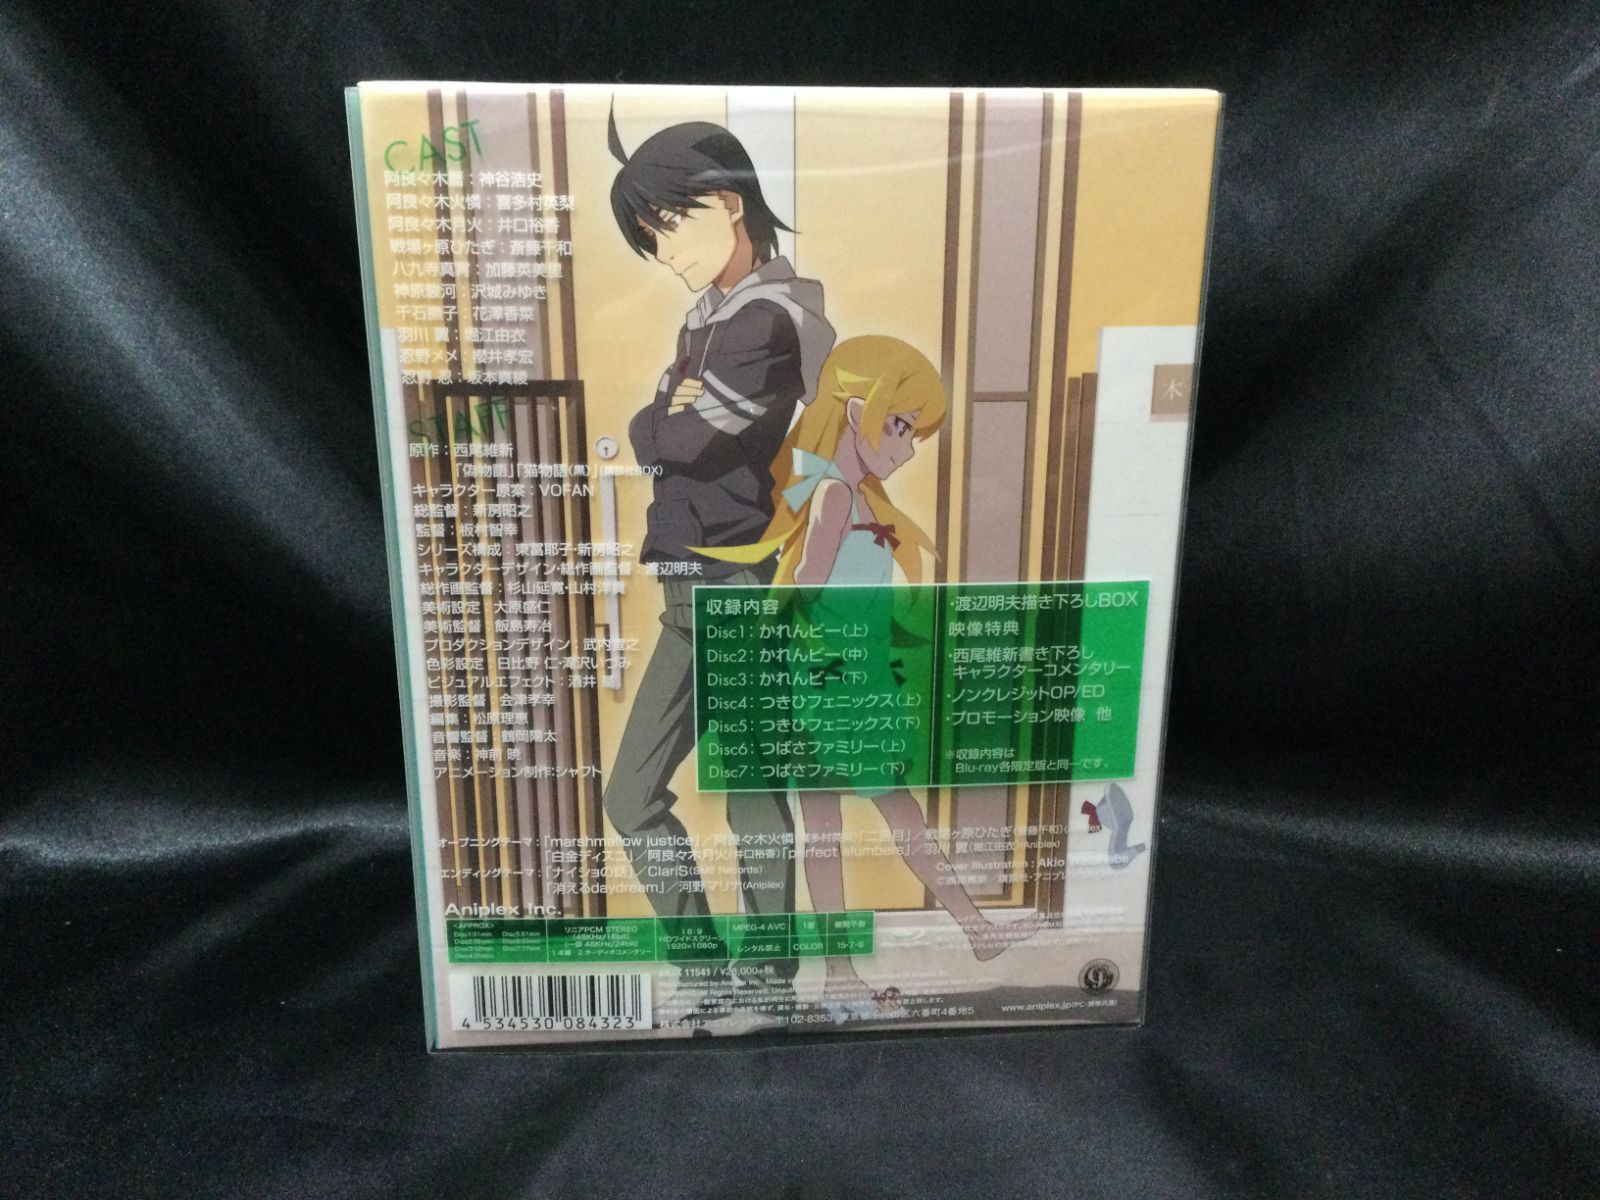 ☆ 偽物語&猫物語(黒) Blu-ray Disc Box【完全生産限定版】 - メルカリ